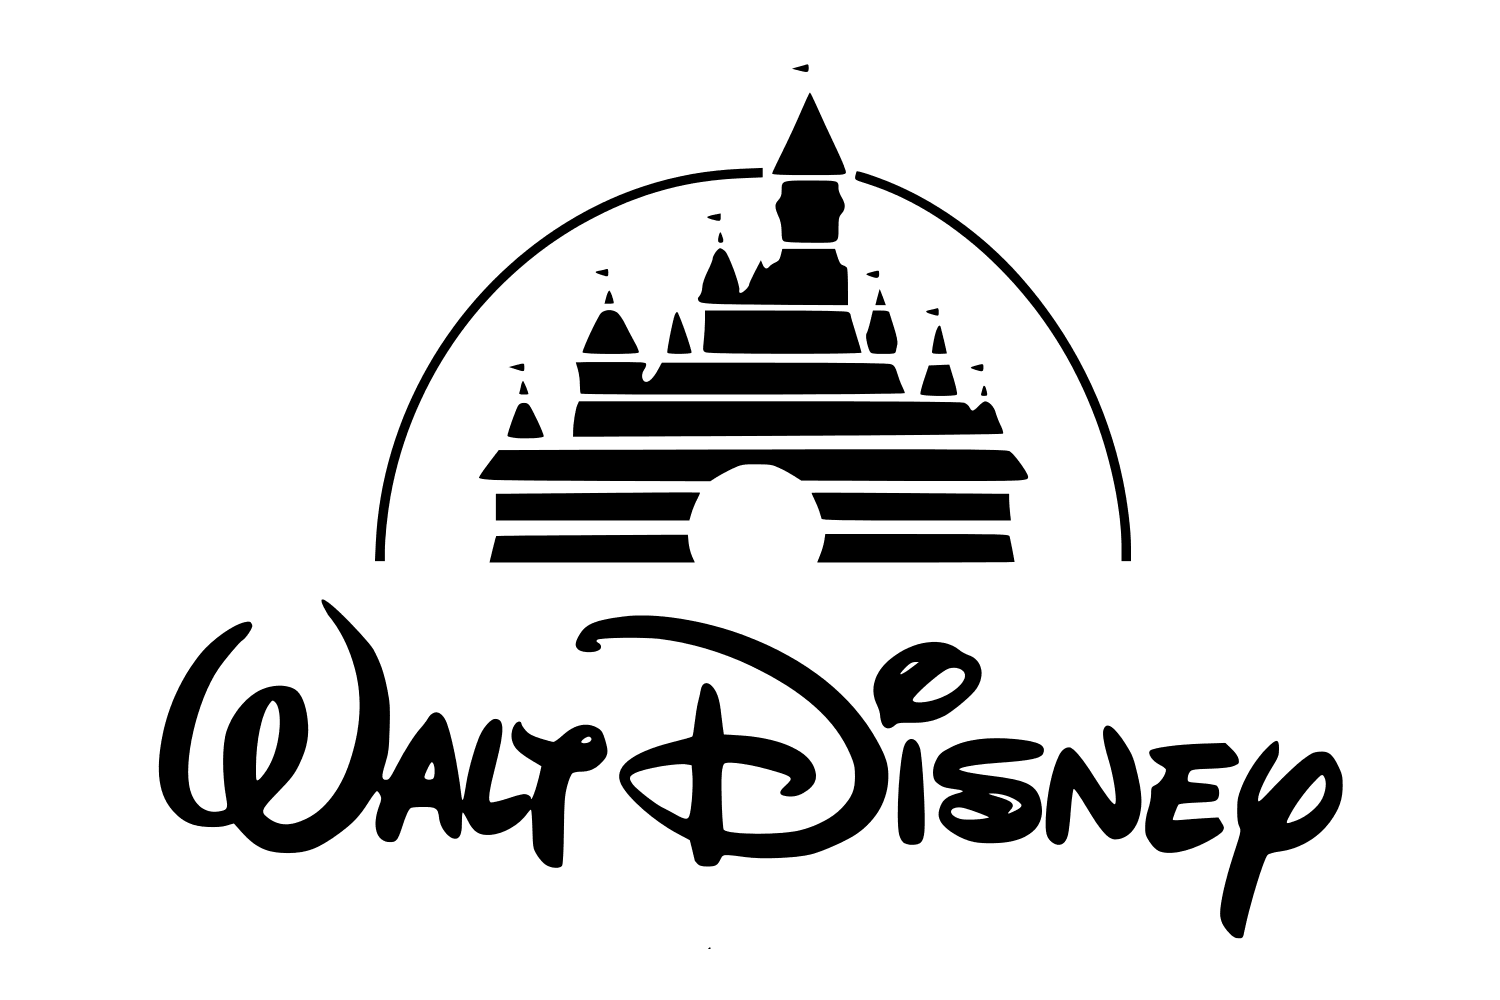 Walt Disney logo